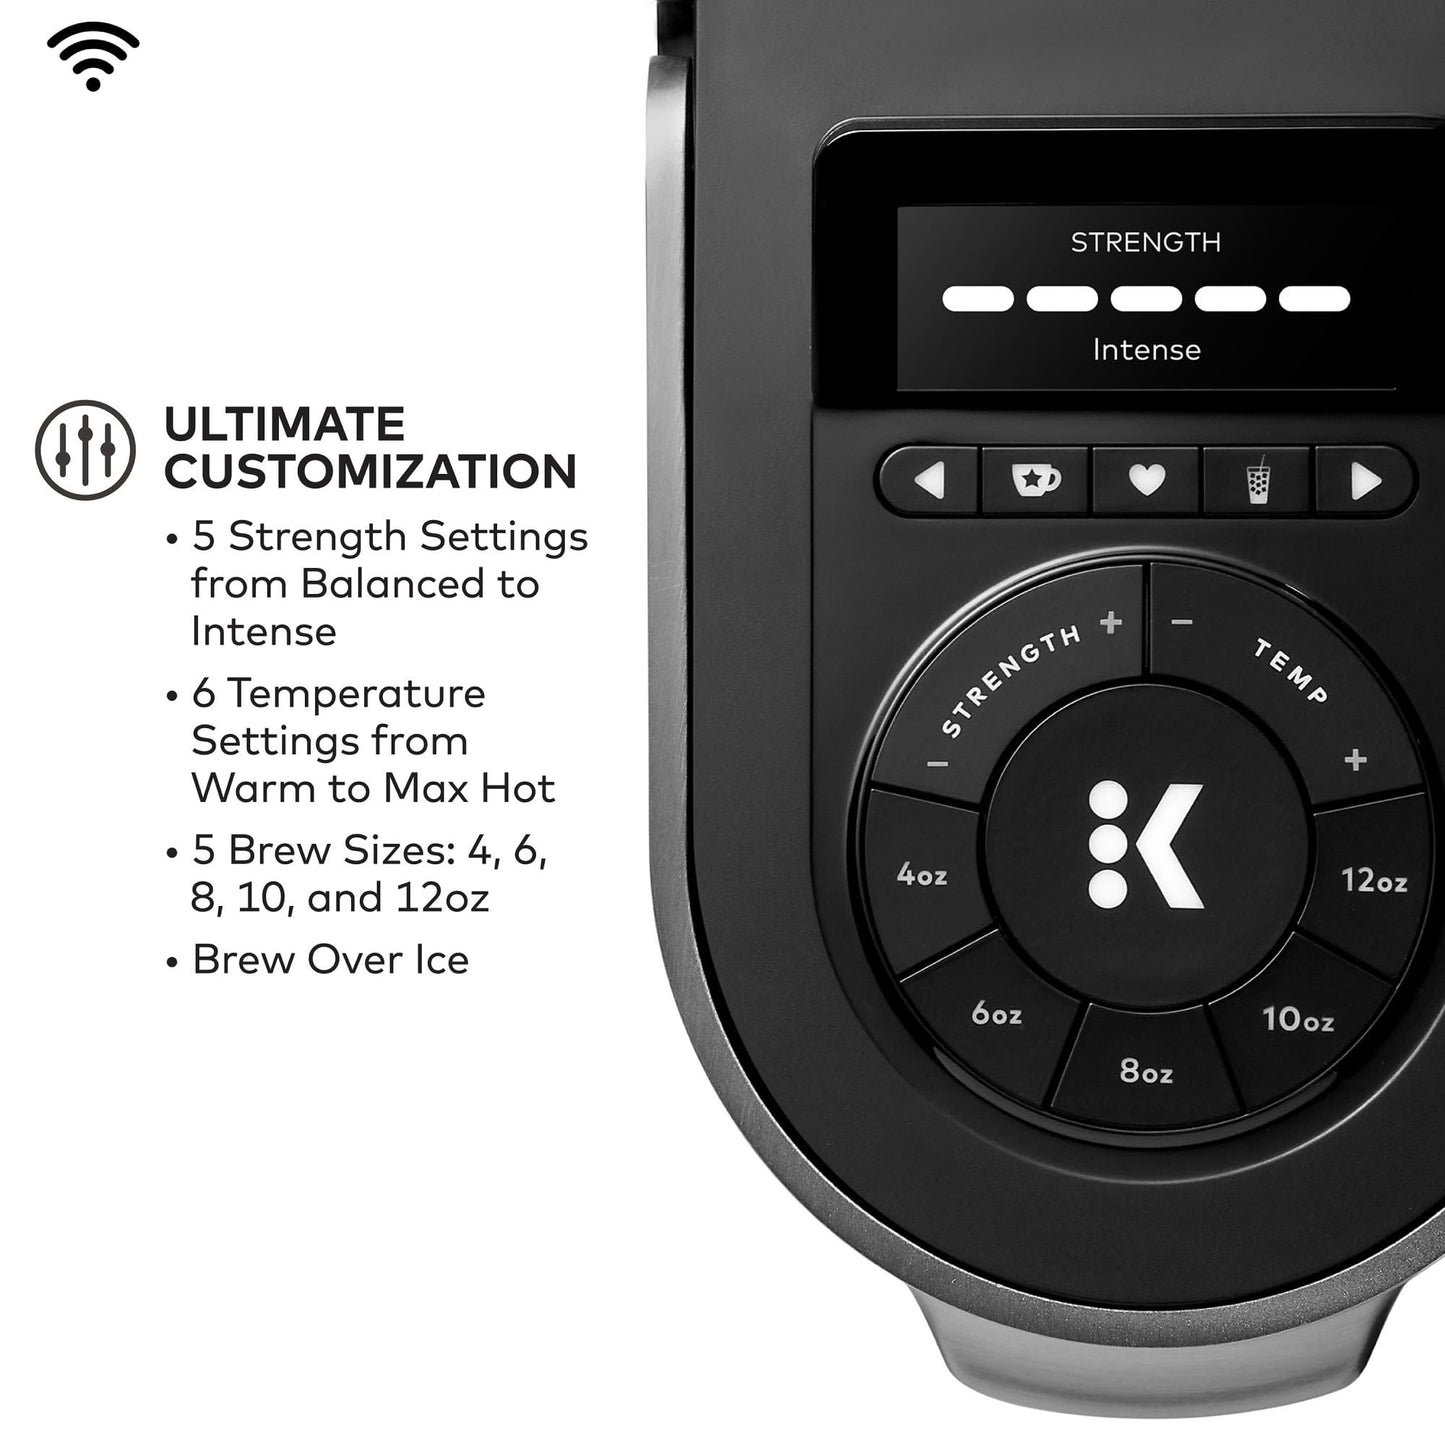 Keurig® K-Supreme Plus SMART Single Serve K-Cup Pod Coffee Maker, Black - Like New